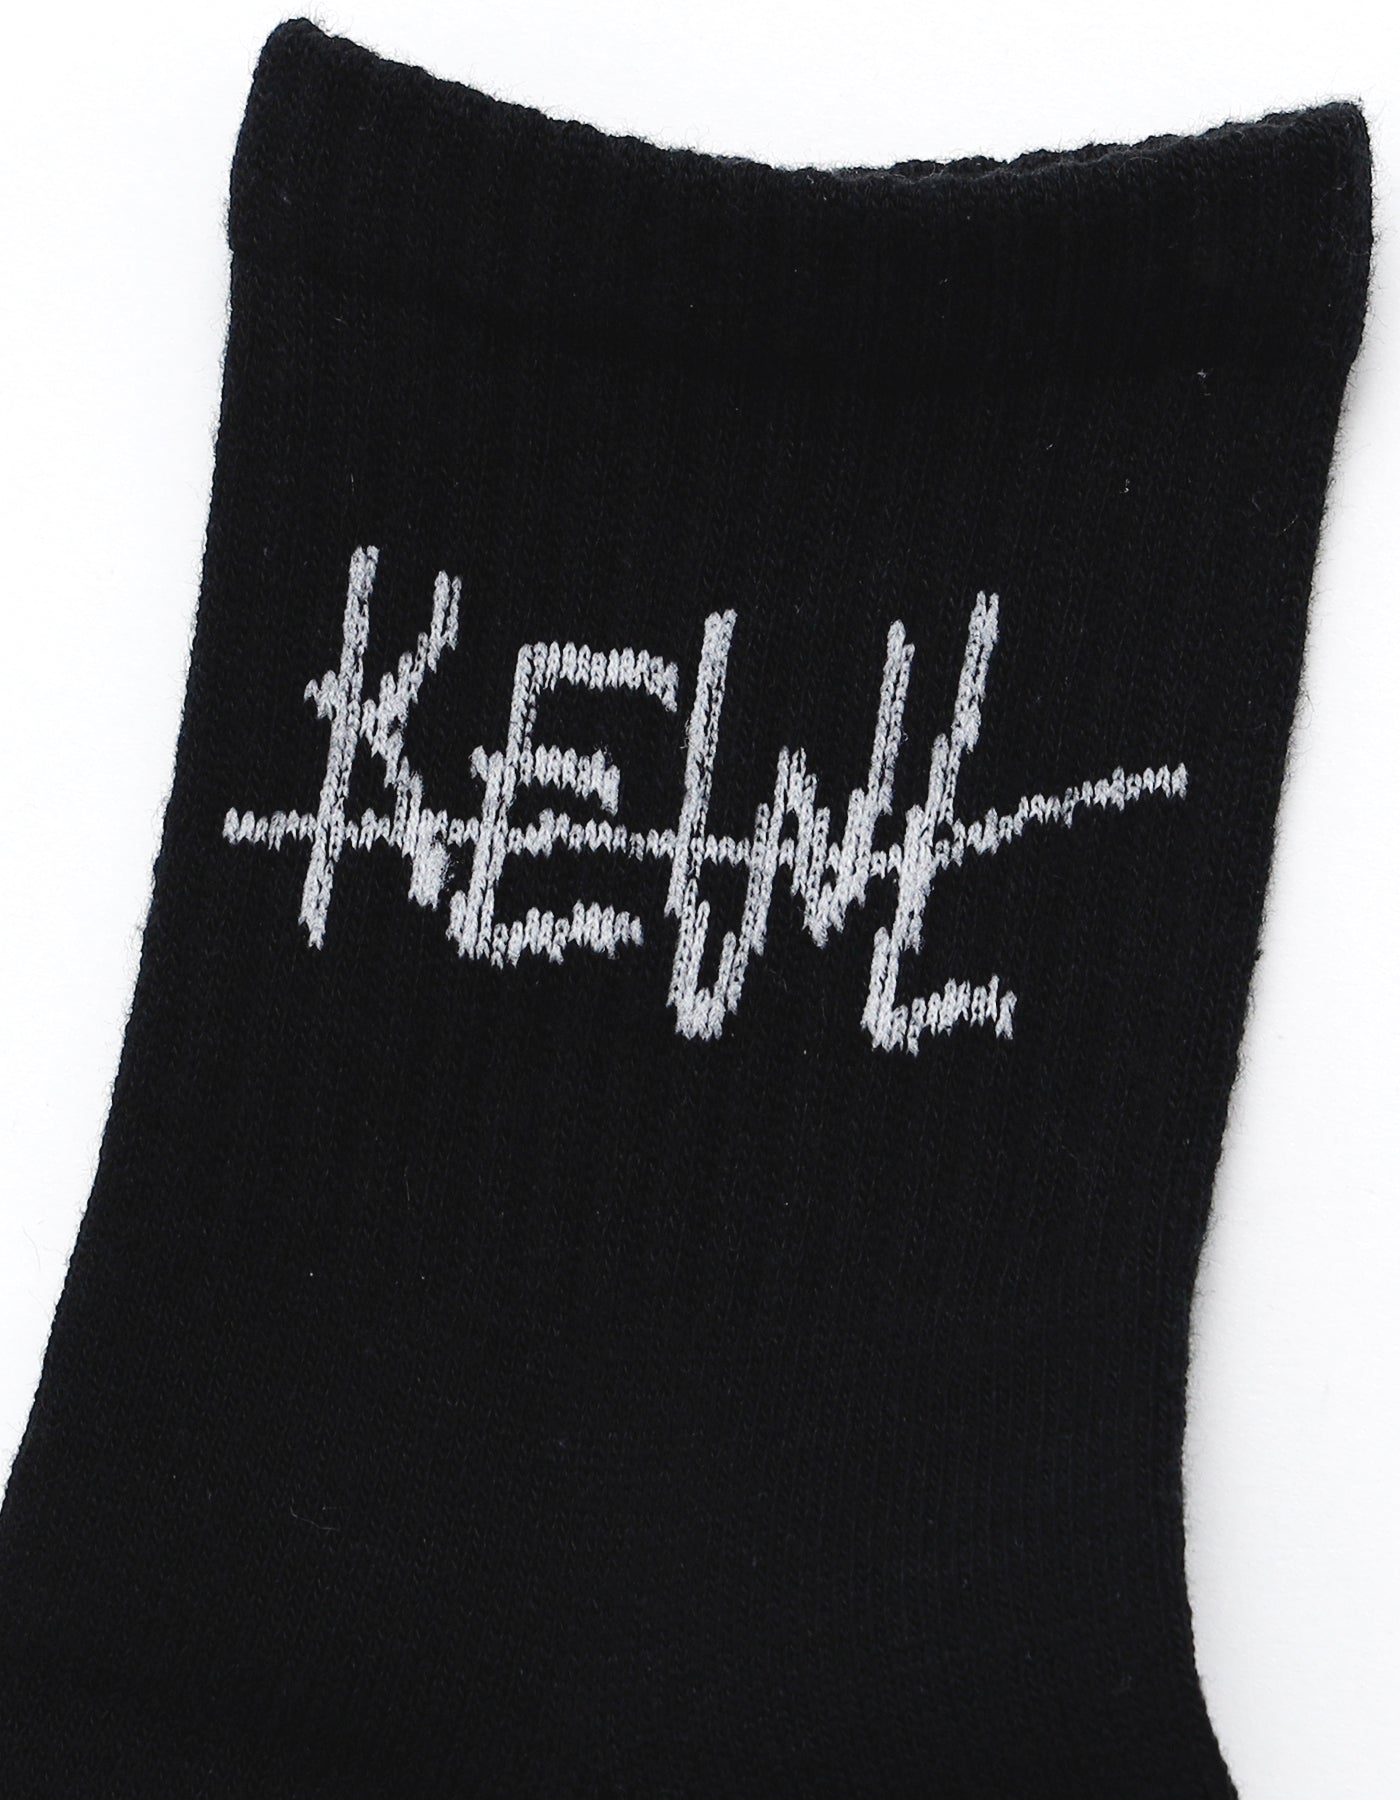 Kewi socks / BLACK